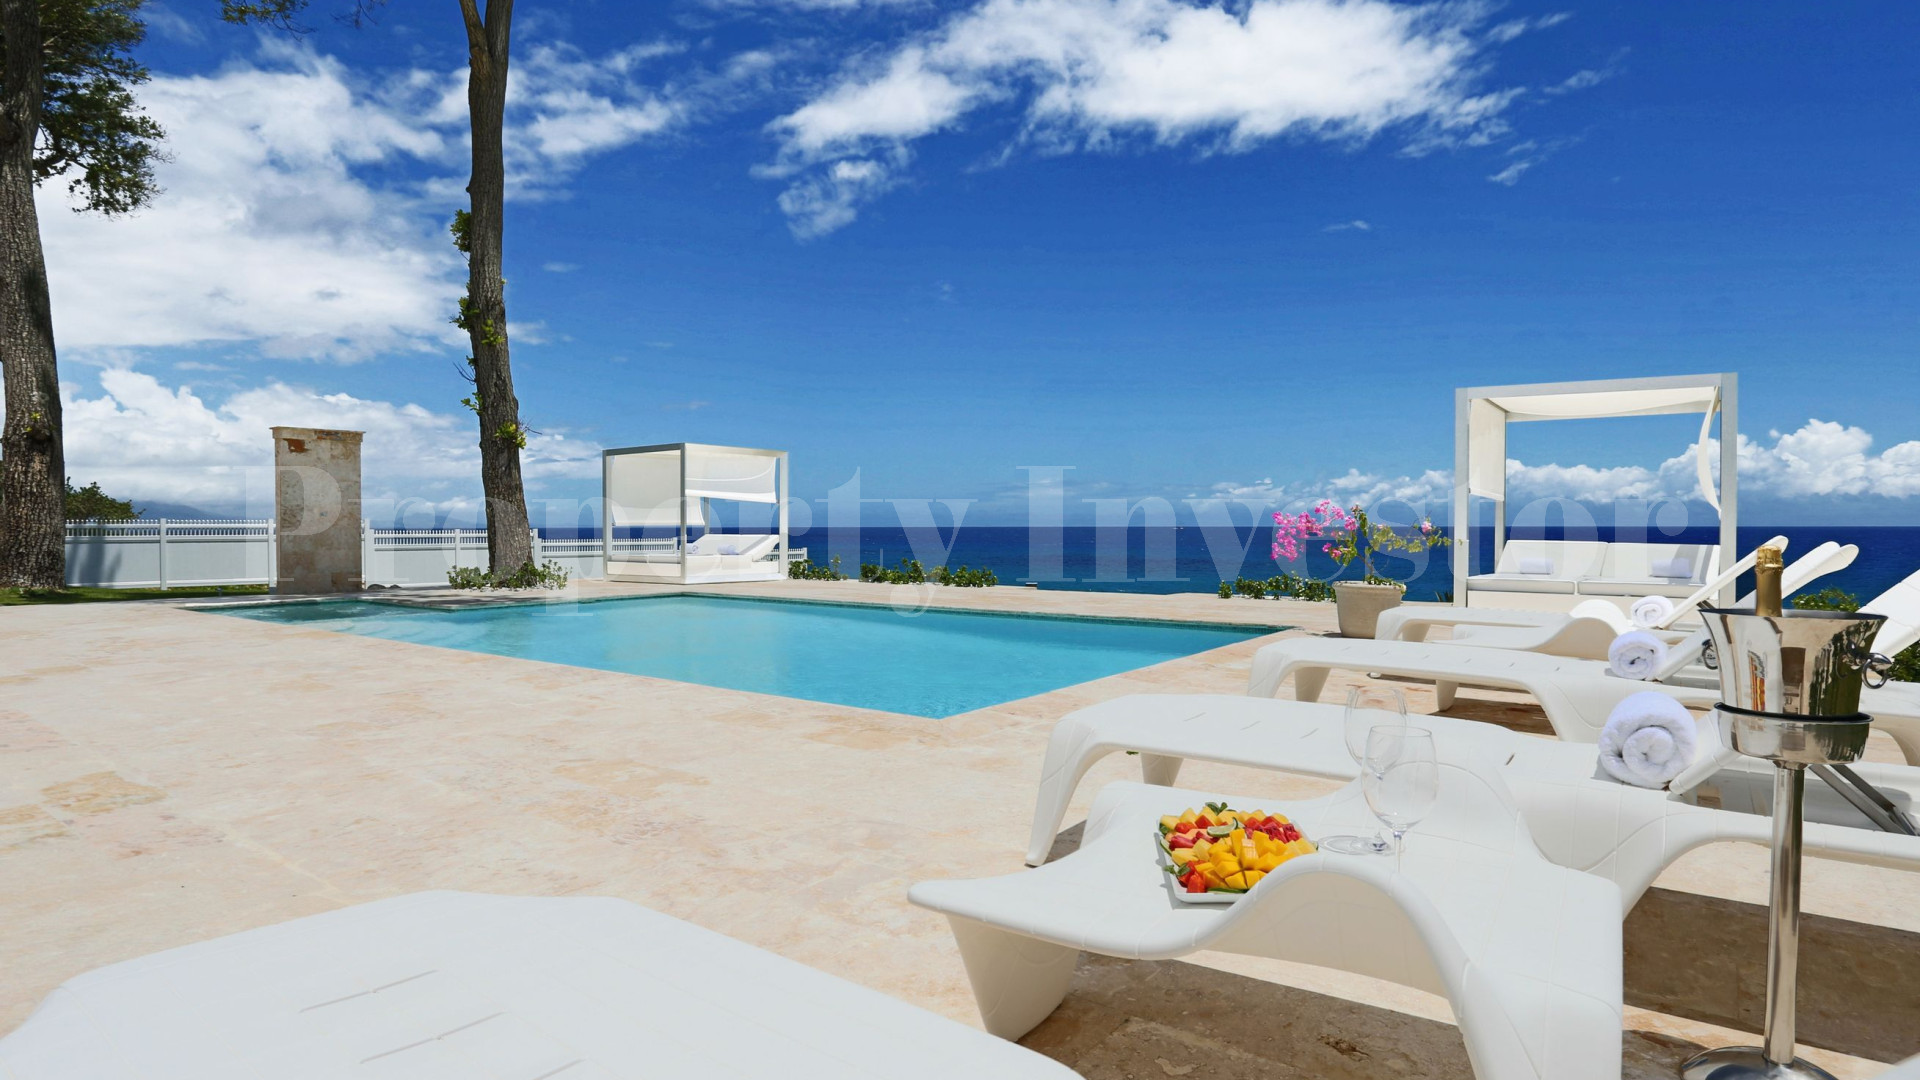 3 Bedroom Oceanfront Villa in the Dominican Republic with 30 Year Financing (Villa 4)